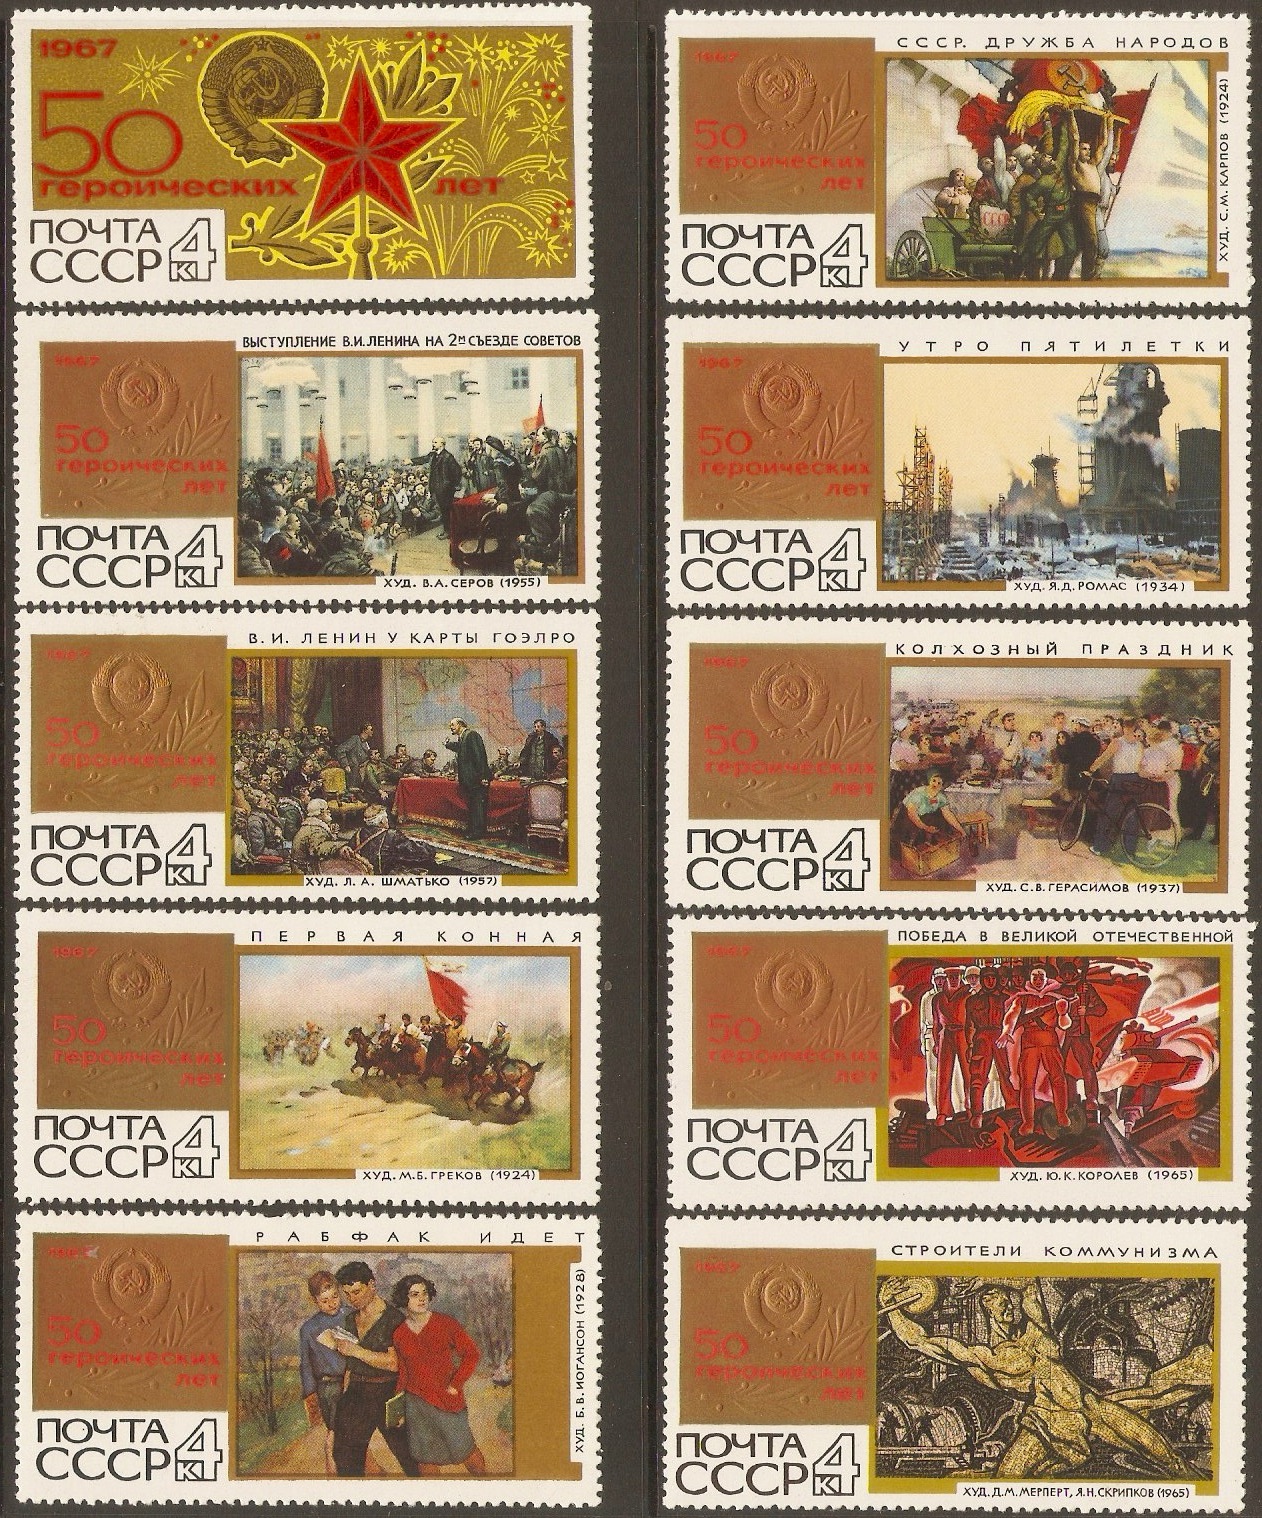 Russia 1967 50th. Anniversary Set. SG3473-SG3482.